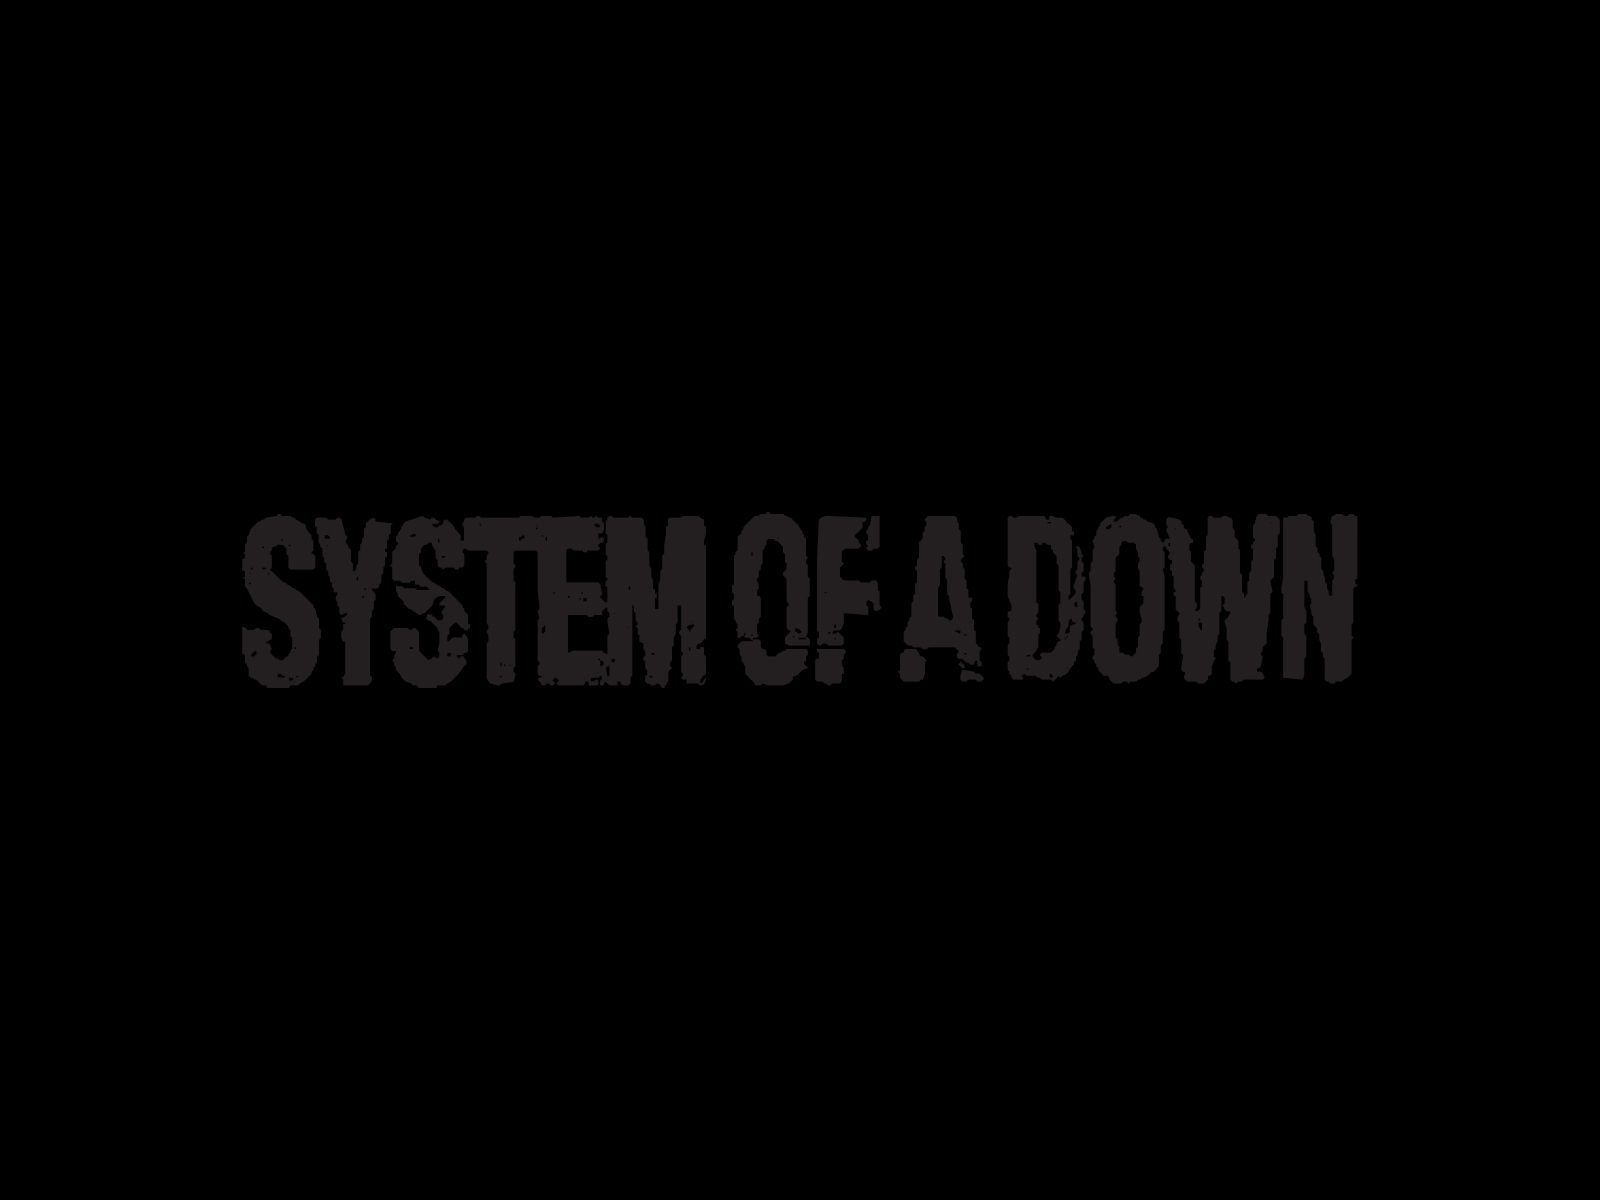 System of a down logo and wallpaper | Band logos - Rock band logos ...